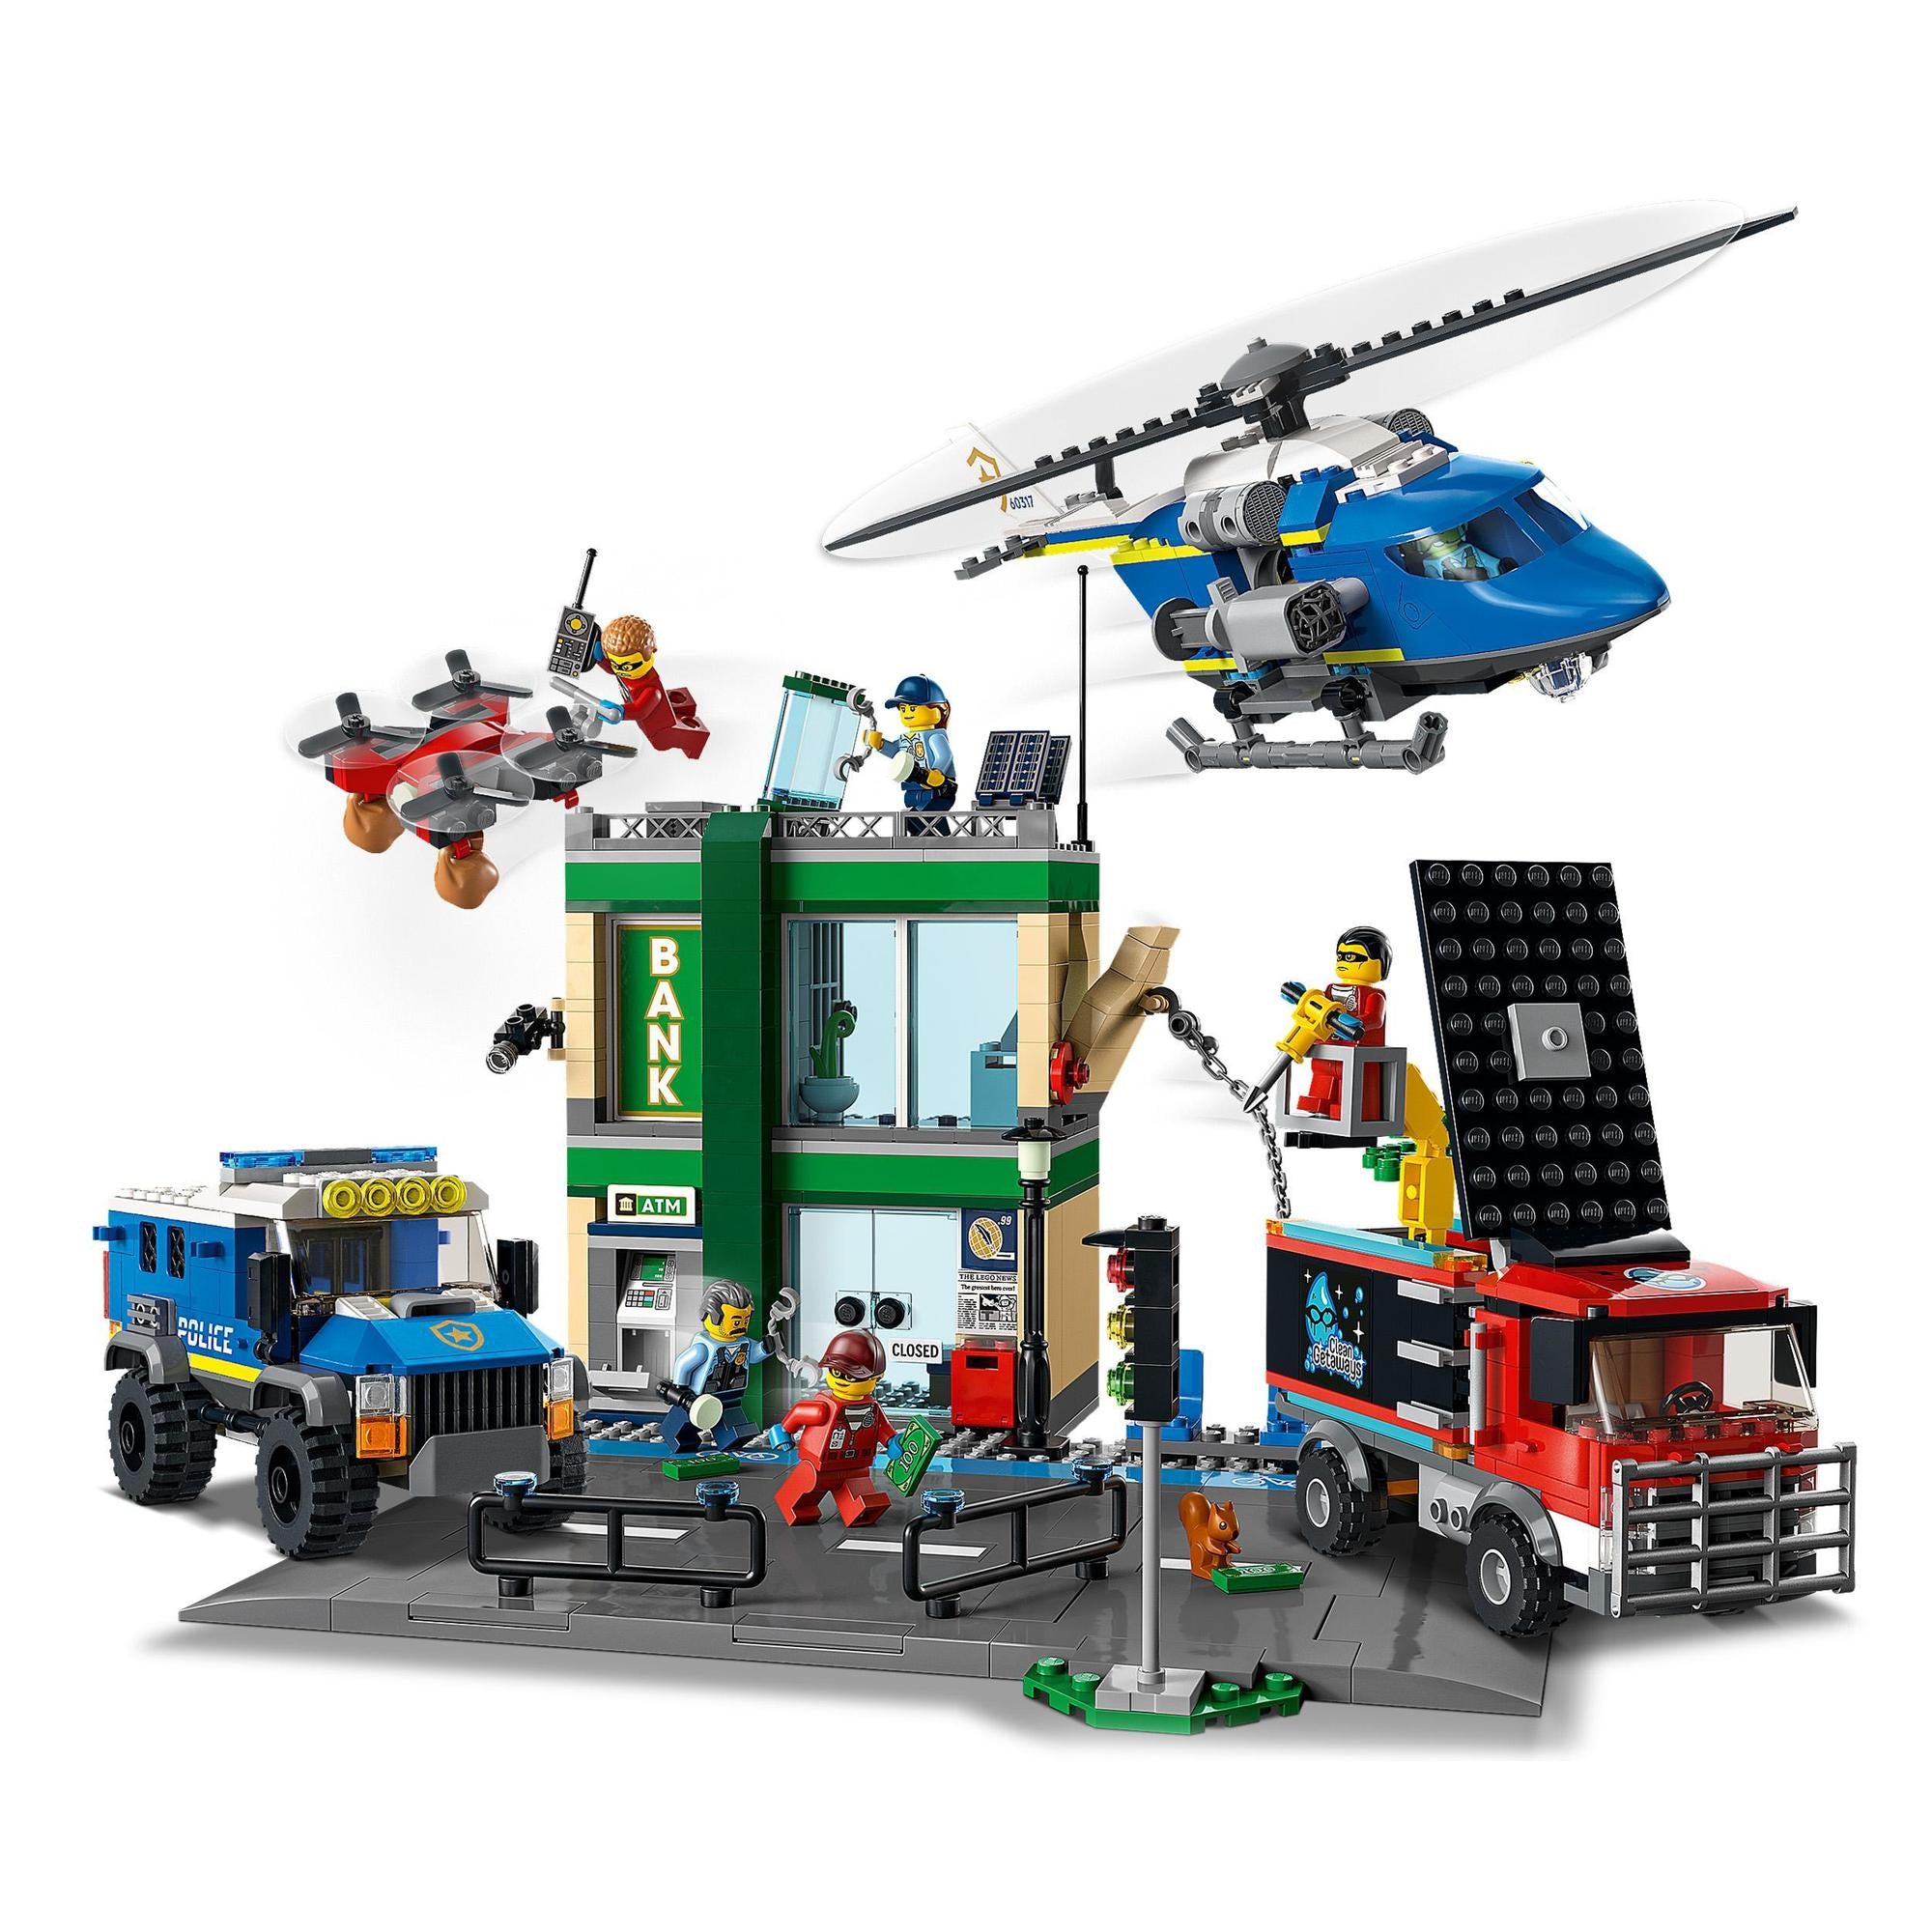 Lego® | 60317 | Banküberfall mit Verfolgungsjagd